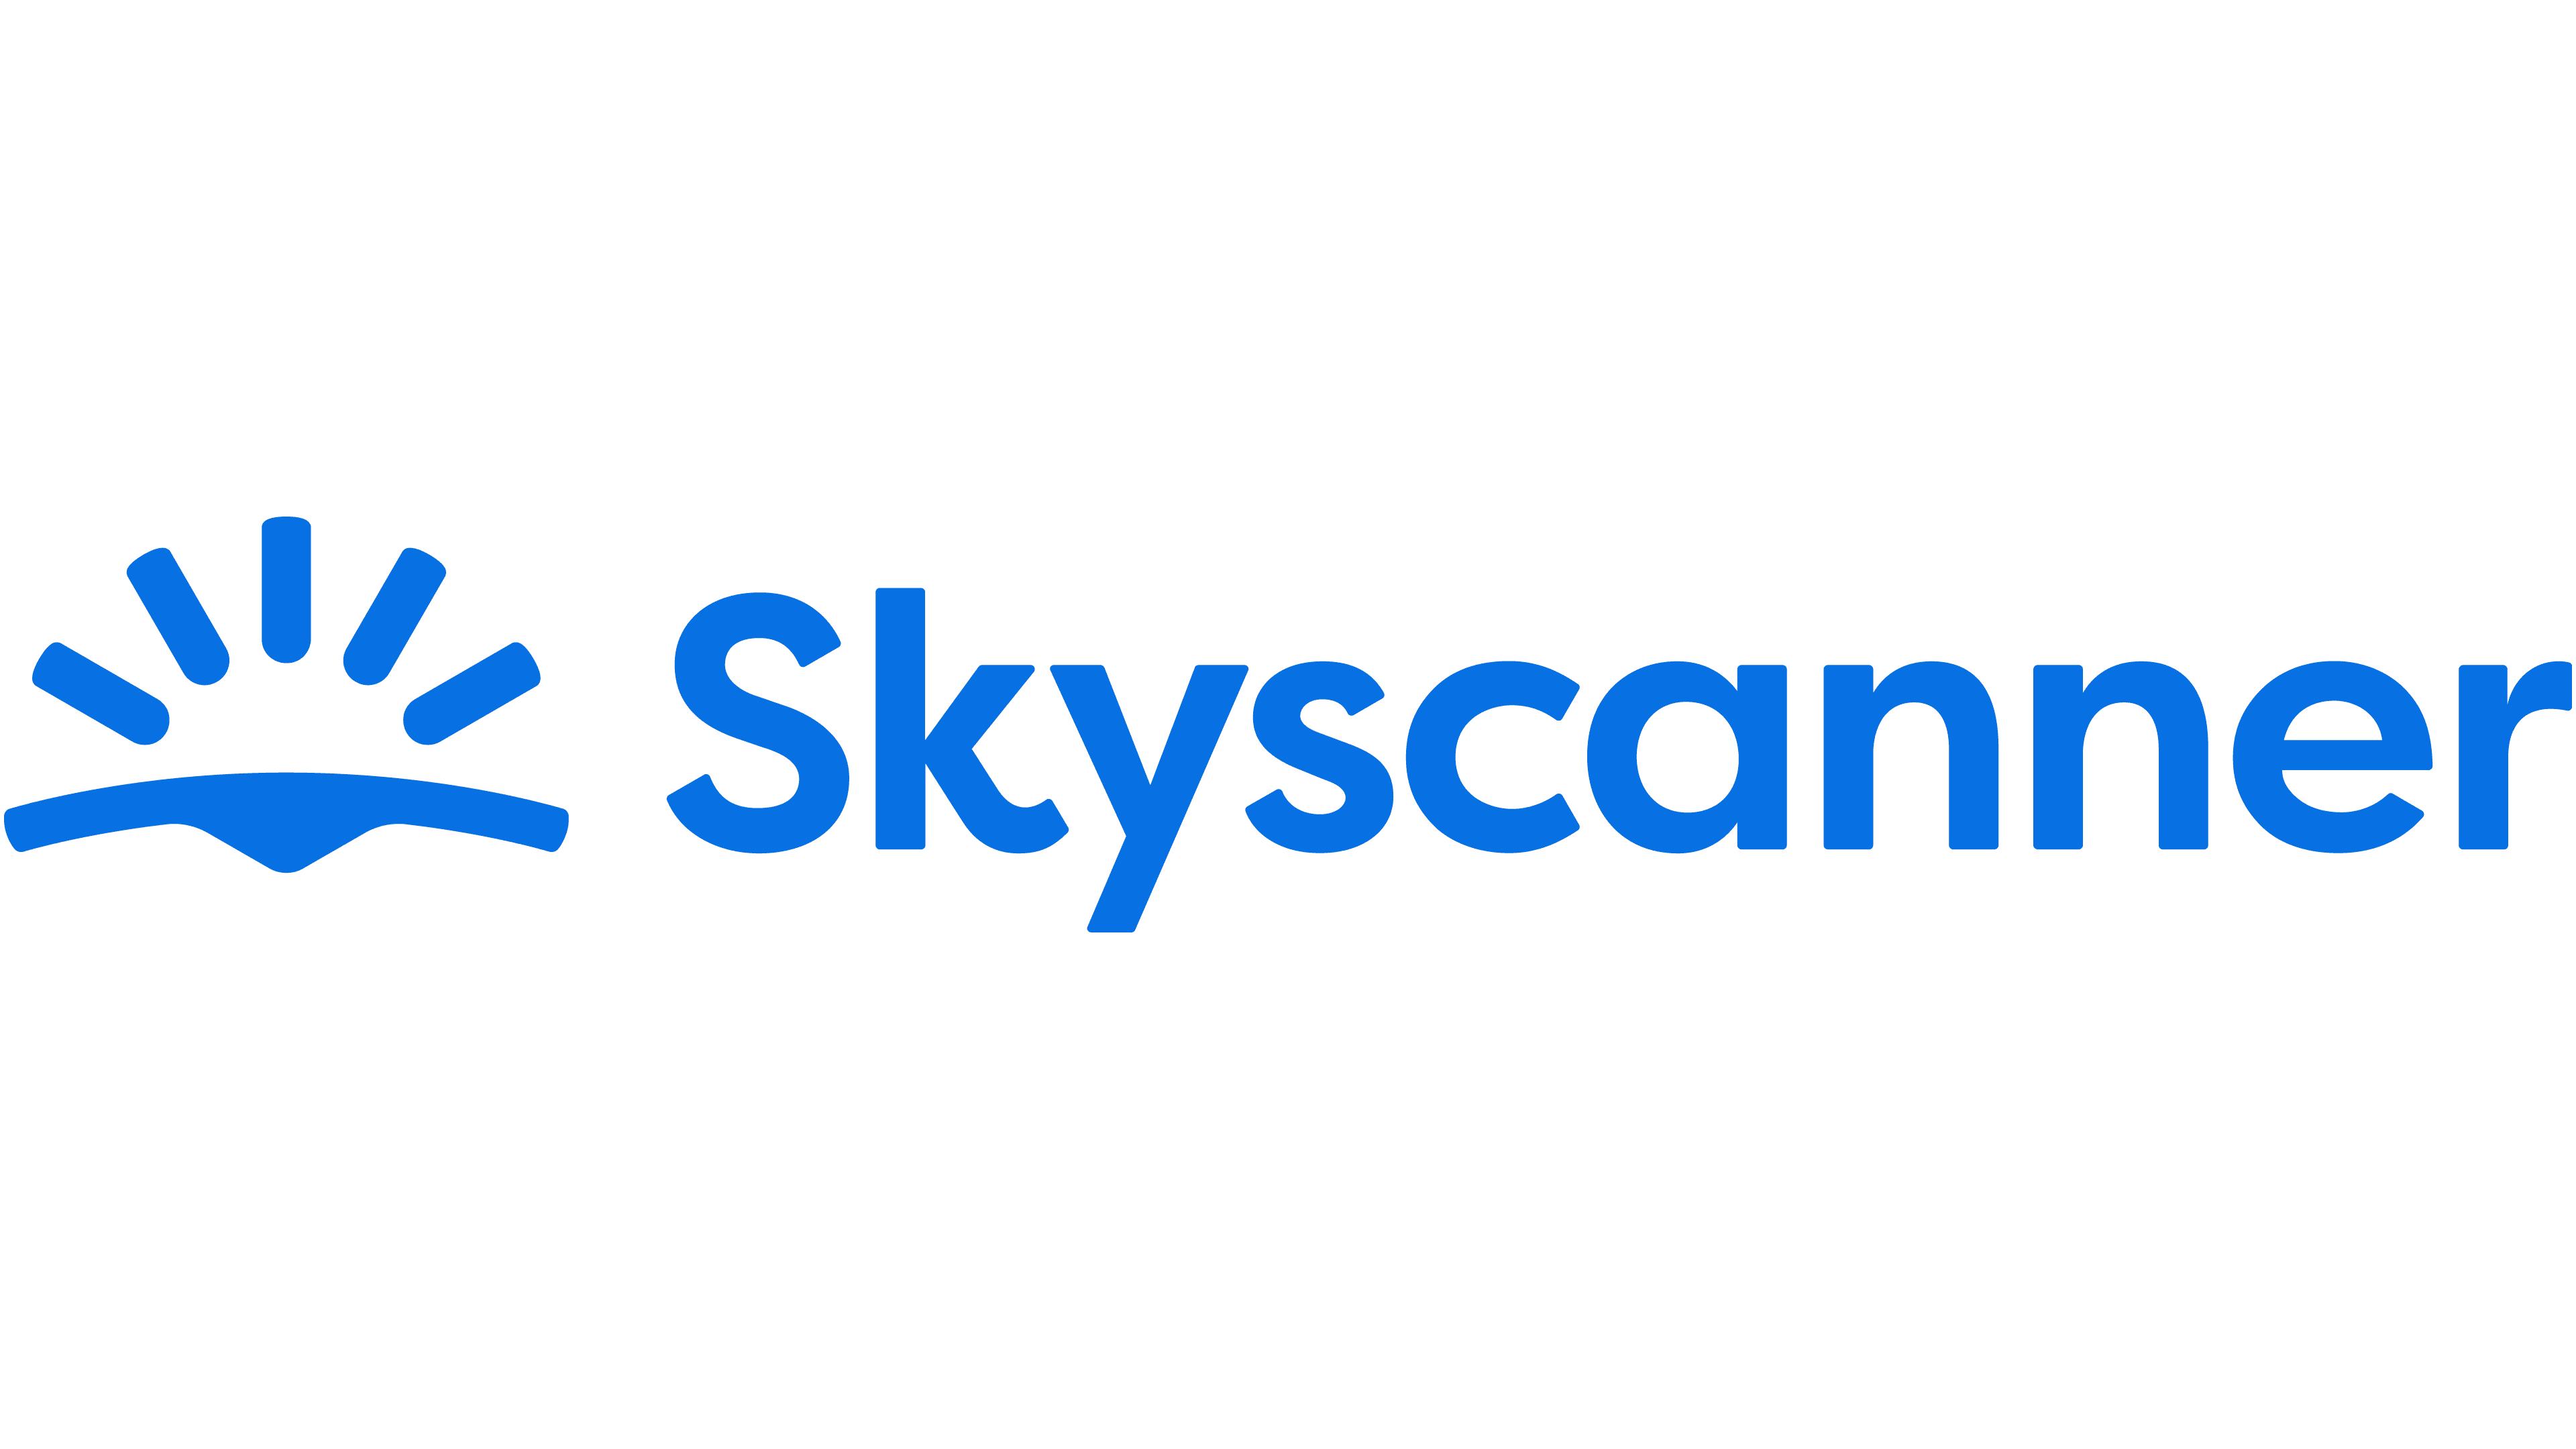 Skyscanner Proxy